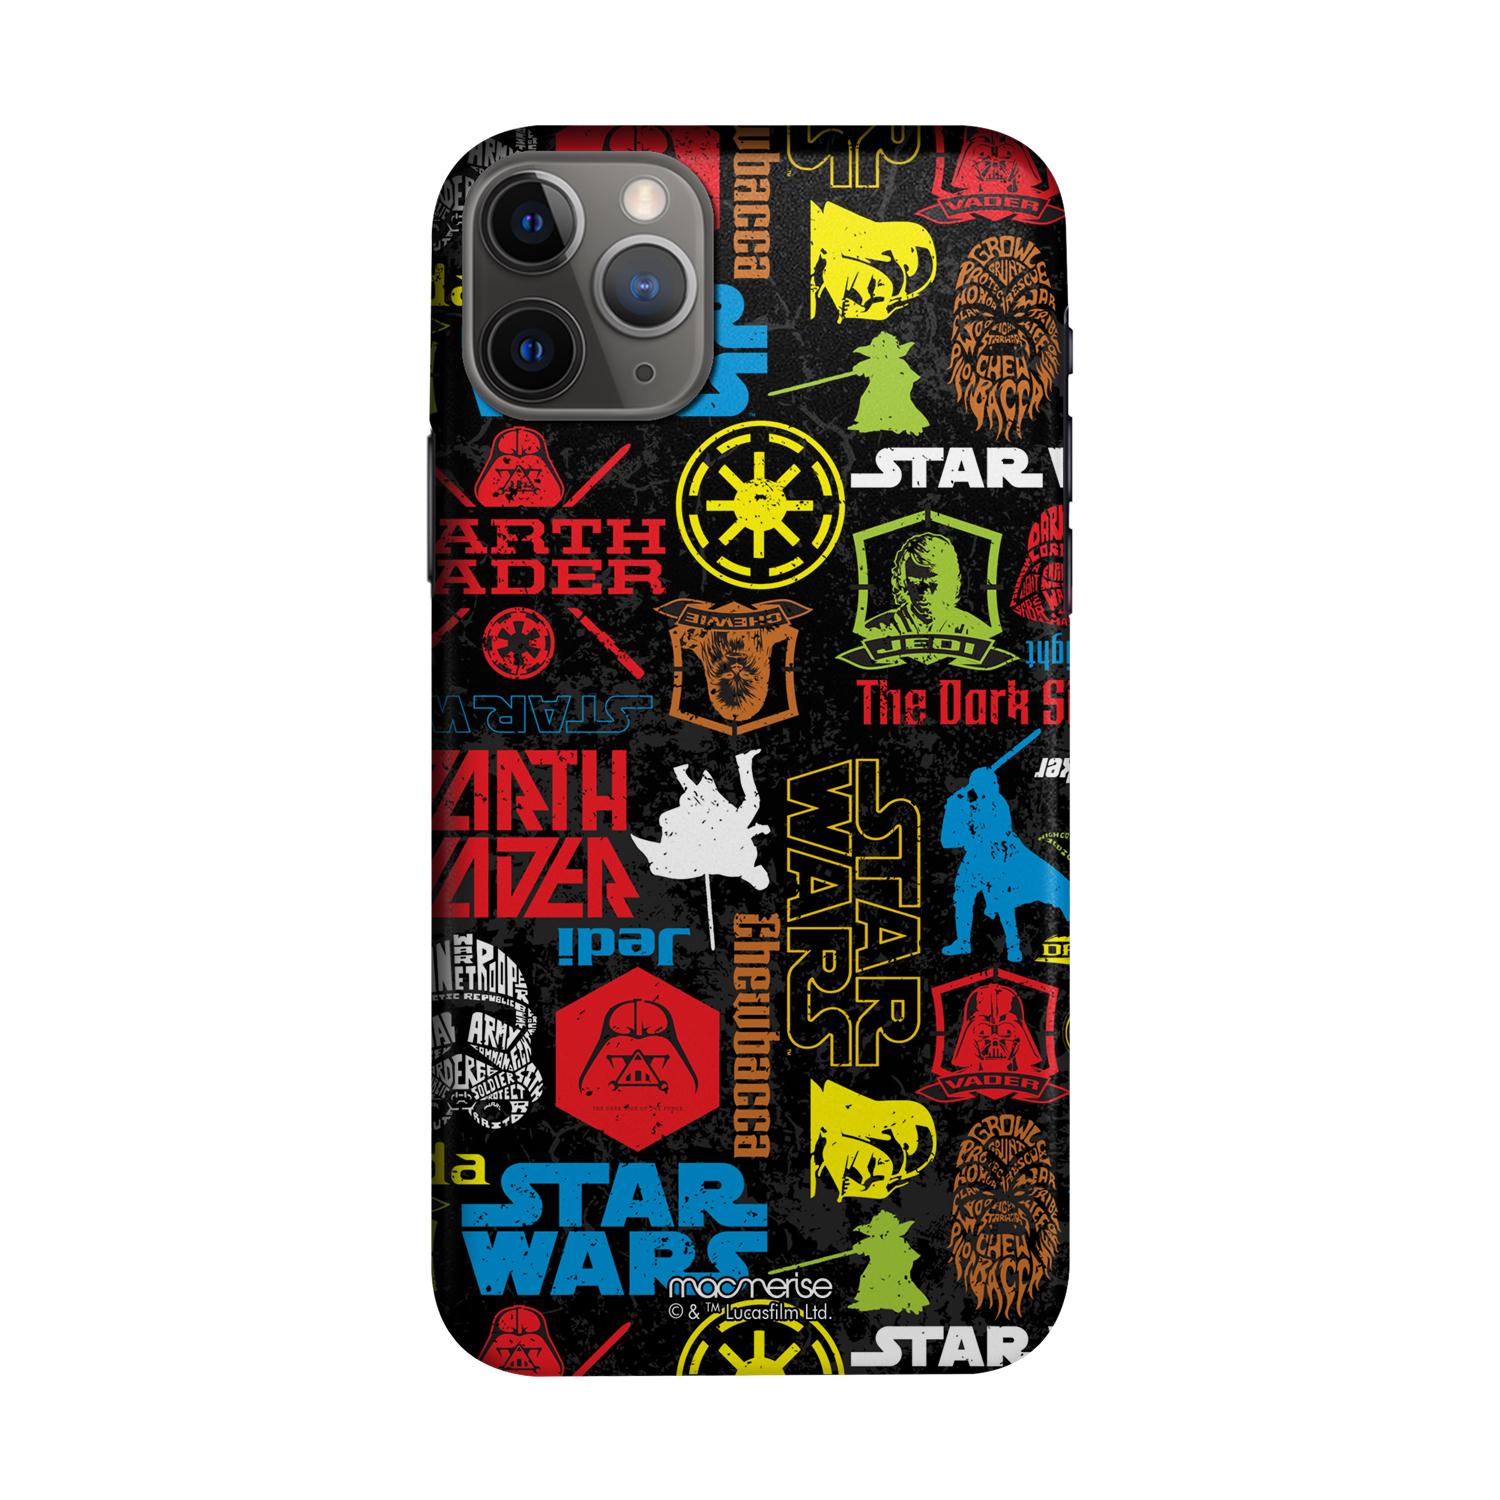 Buy Star wars mashup - Sleek Phone Case for iPhone 11 Pro Max Online